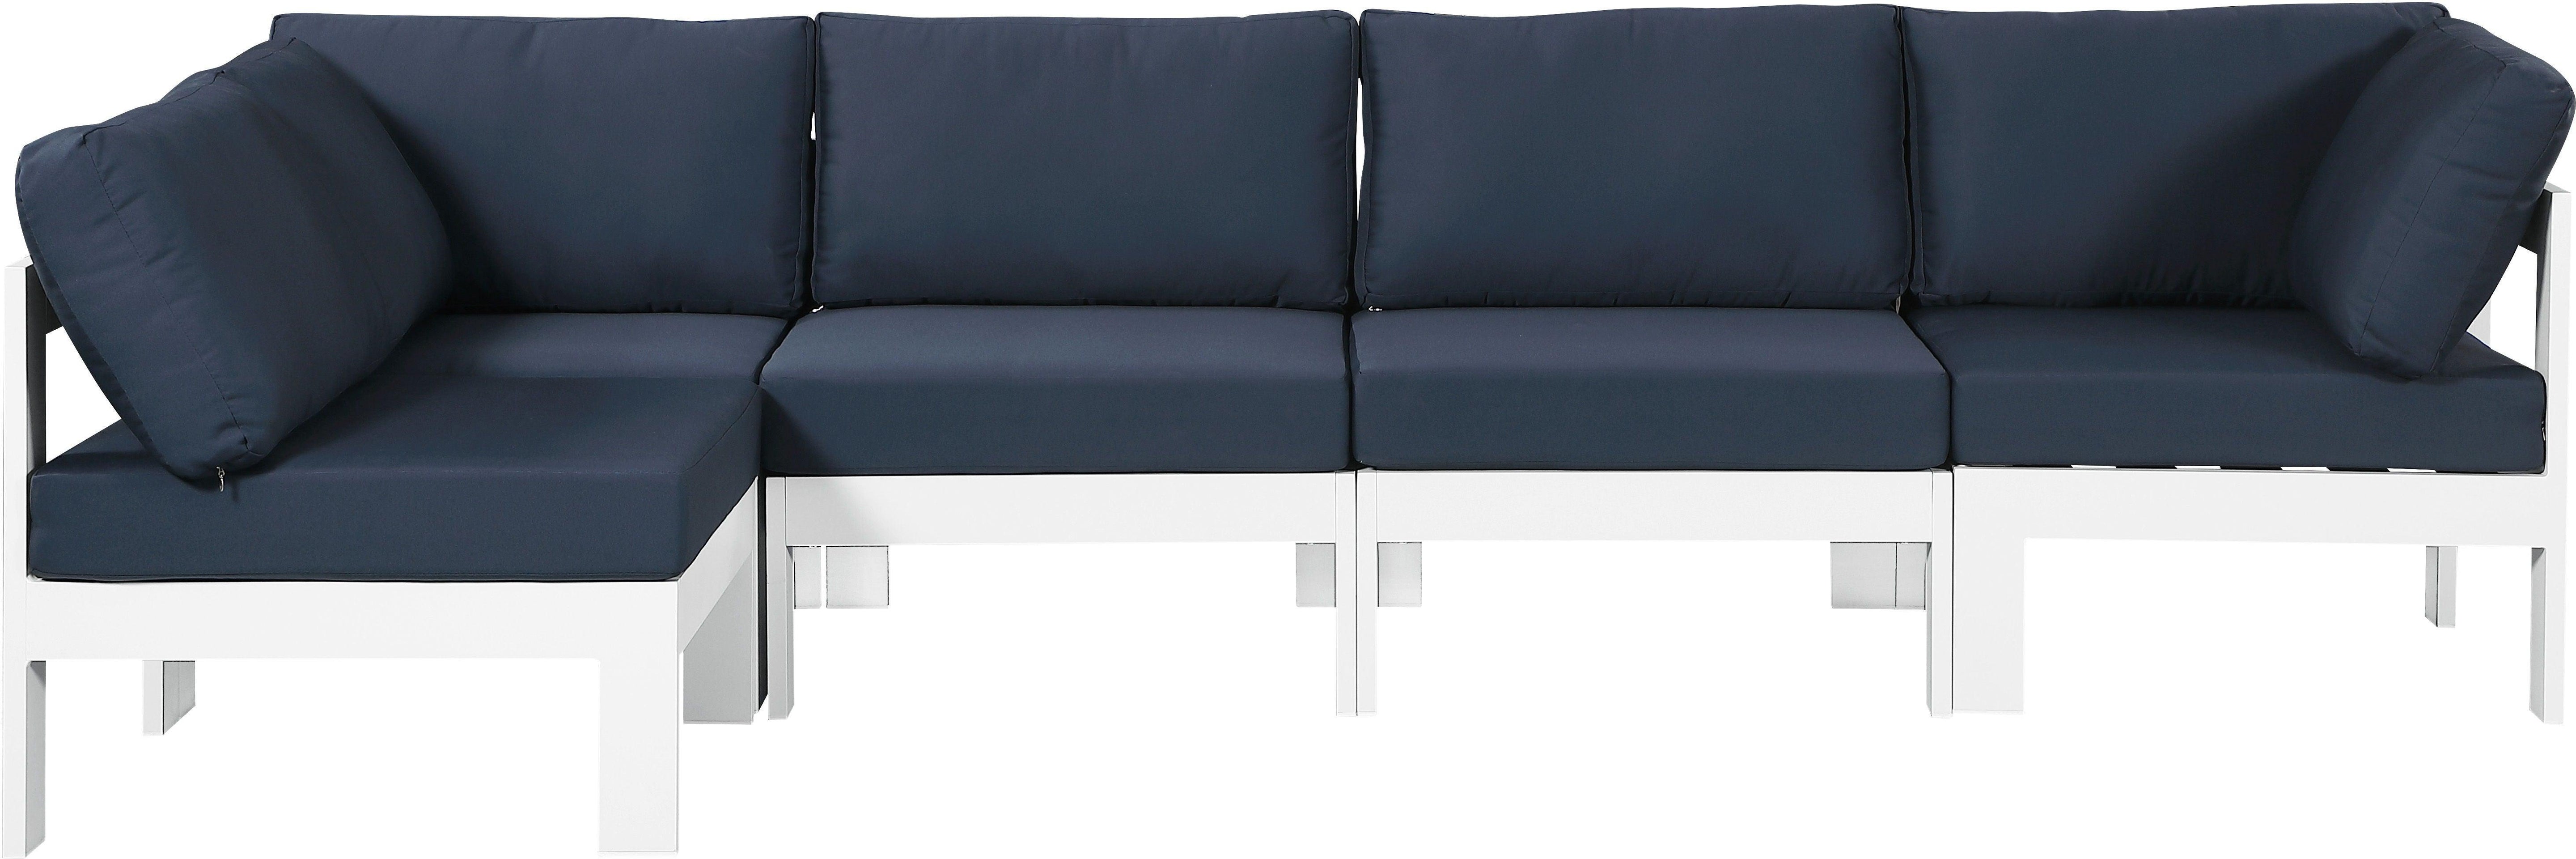 Meridian Furniture - Nizuc - Outdoor Patio Modular Sectional 5 Piece - Navy - Fabric - 5th Avenue Furniture